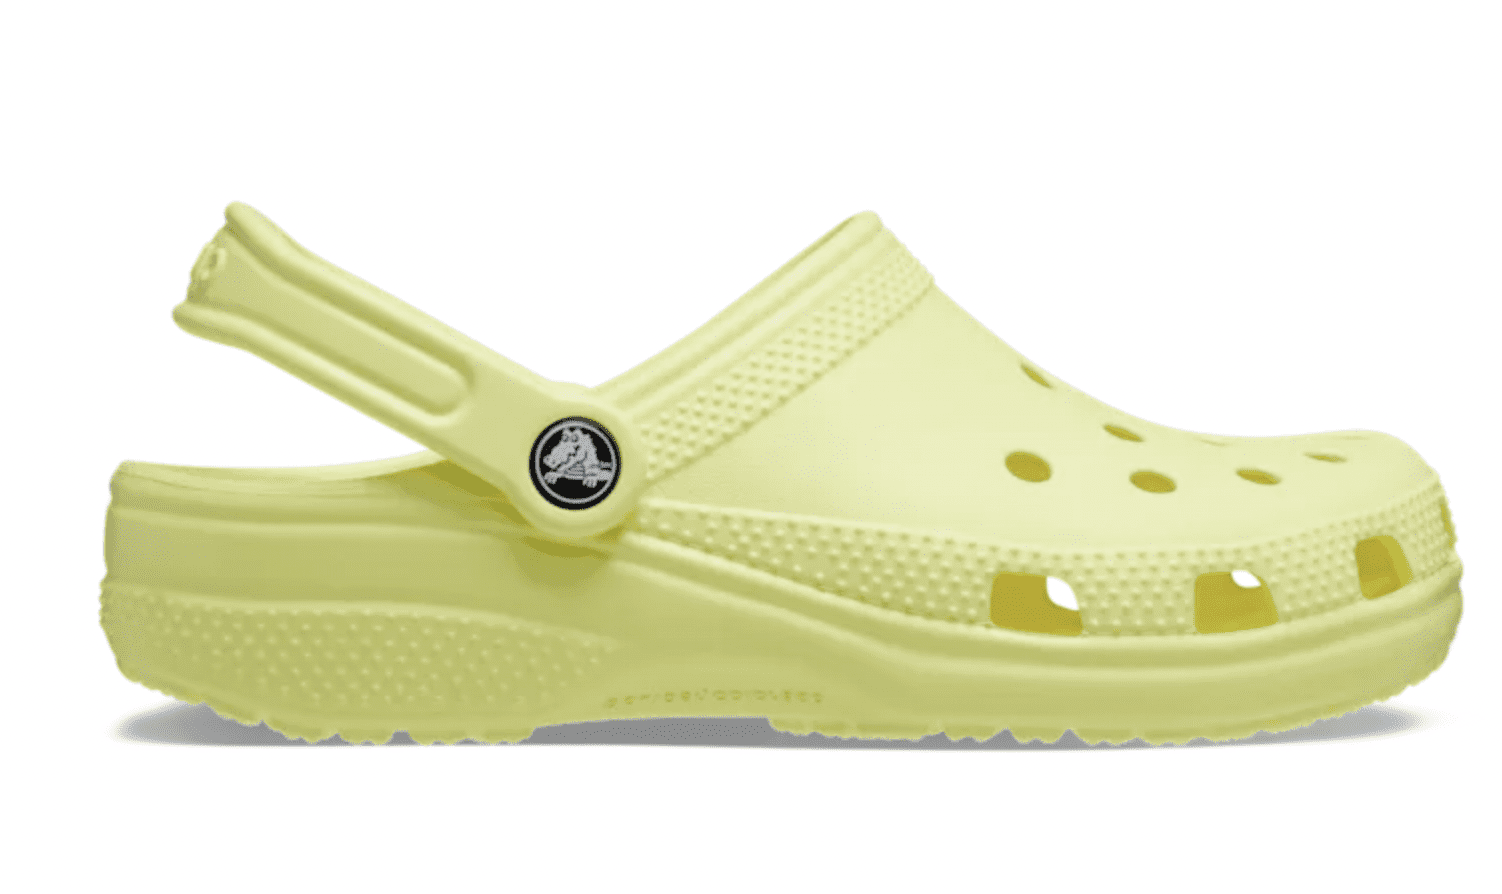 Crocs: Extra 25% off sale styles